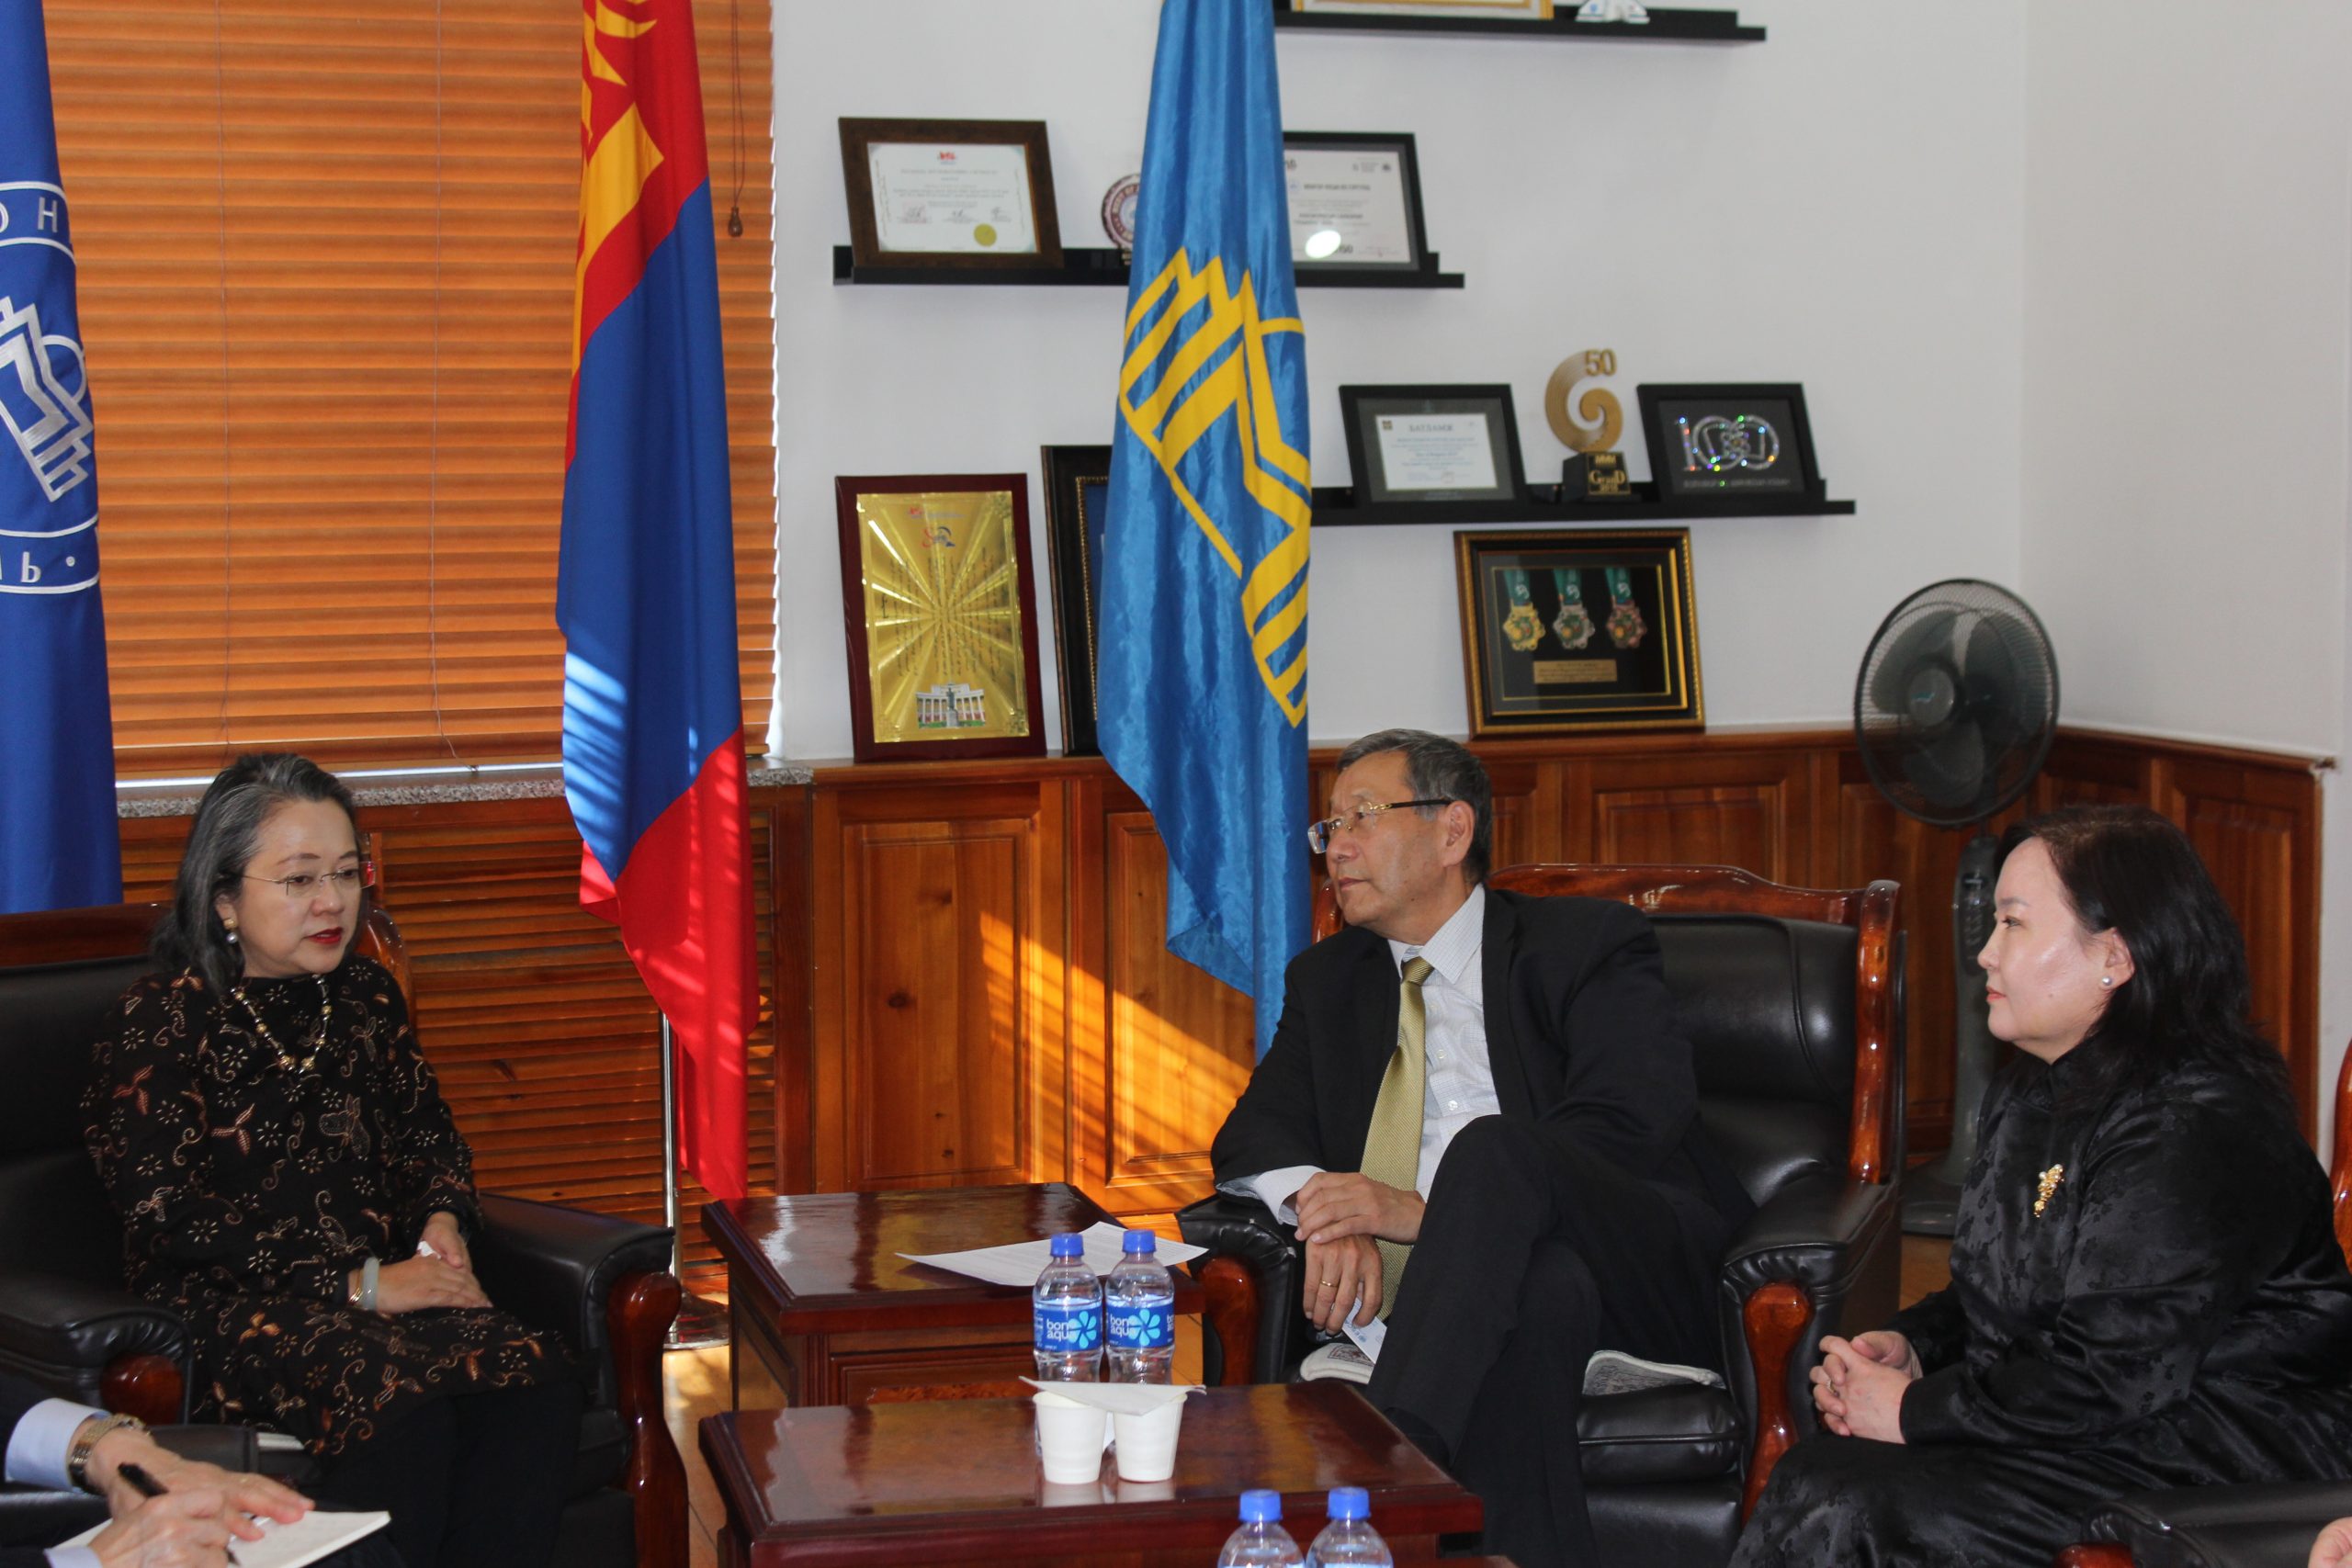 Ms. Armida Salsiah ALISJAHBANA, UN Undersecretary General, Executive Secretary of UN ESCAP visited the National University of Mongolia